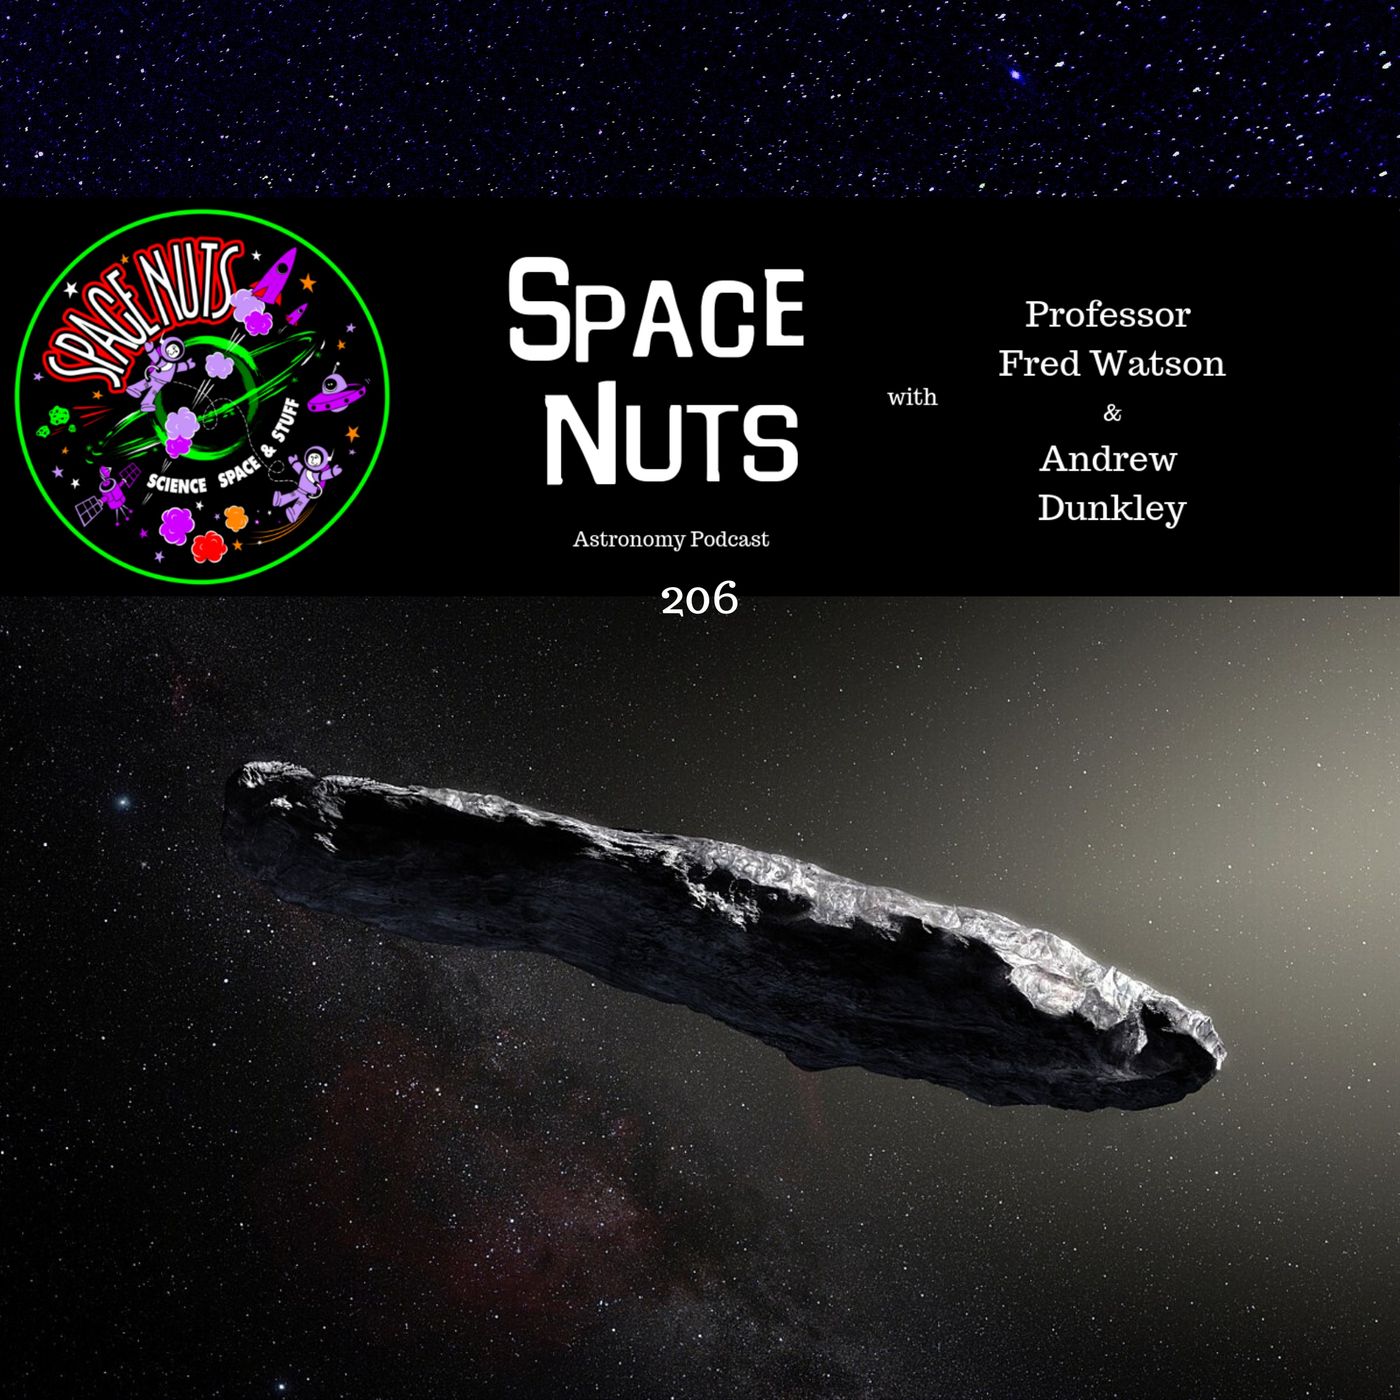 New Theory on Oumuamua